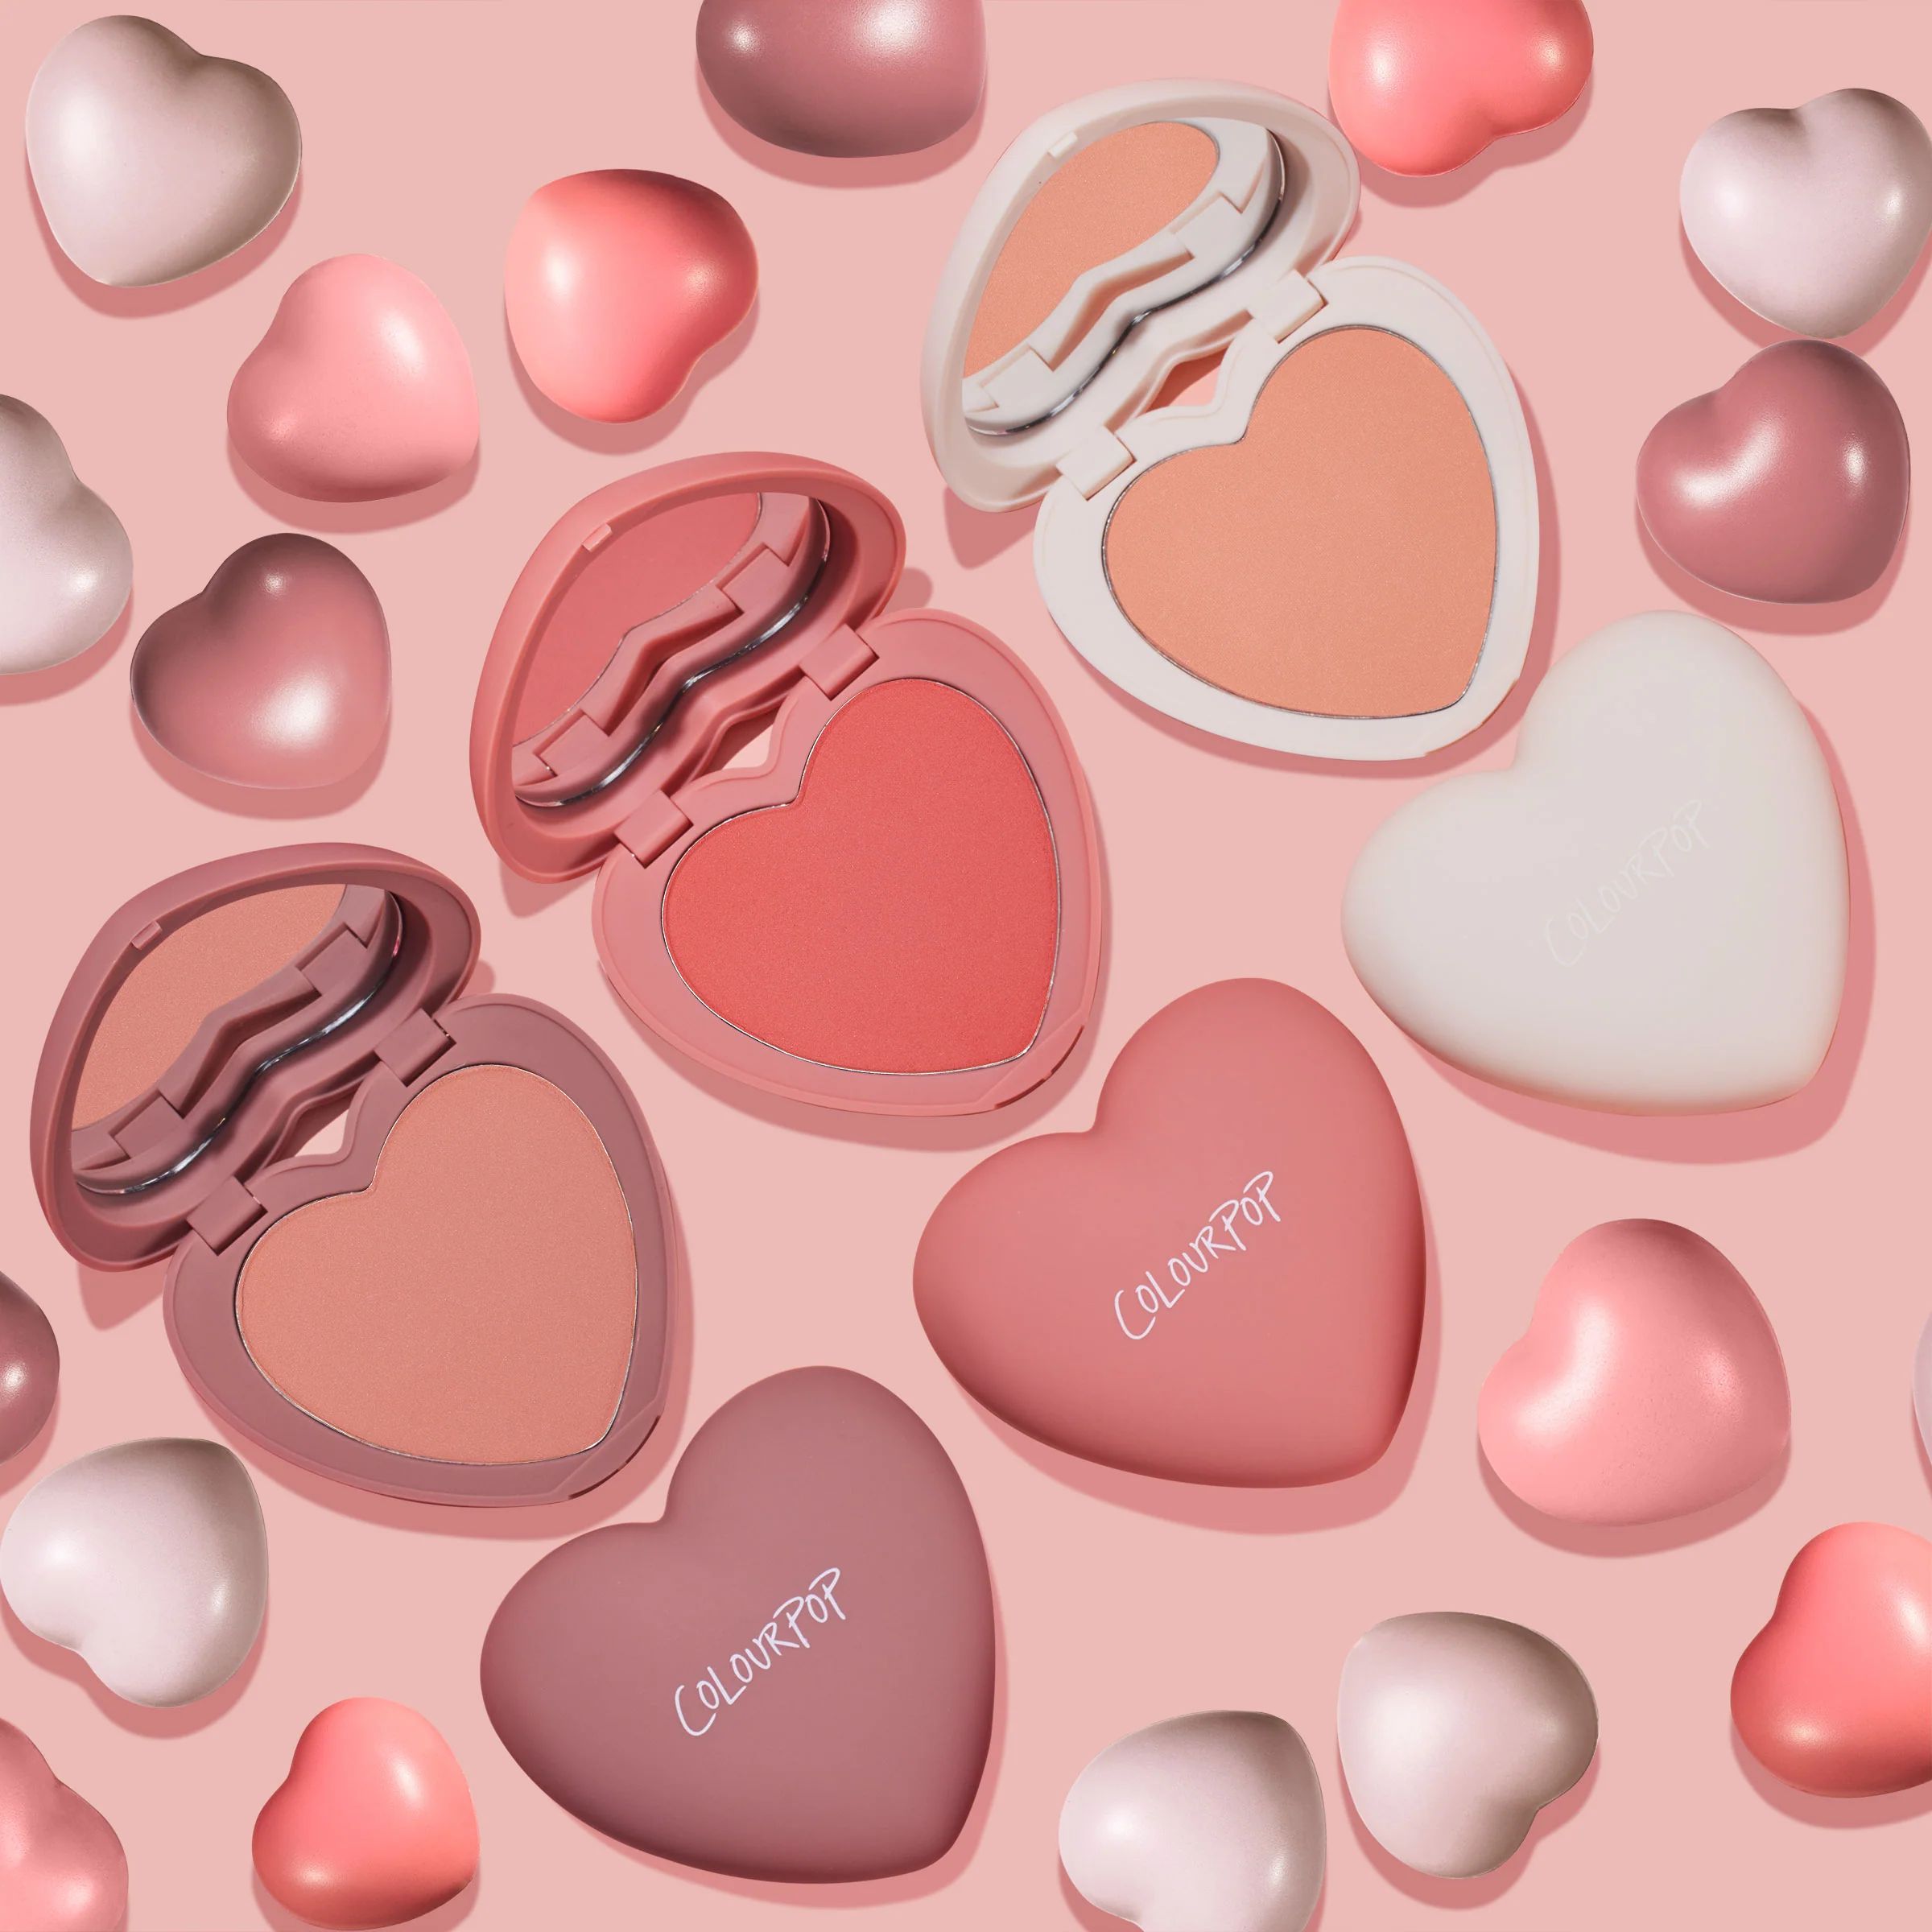 Best Date Ever Heart Compared Pressed Powder Blush Set | Colourpop